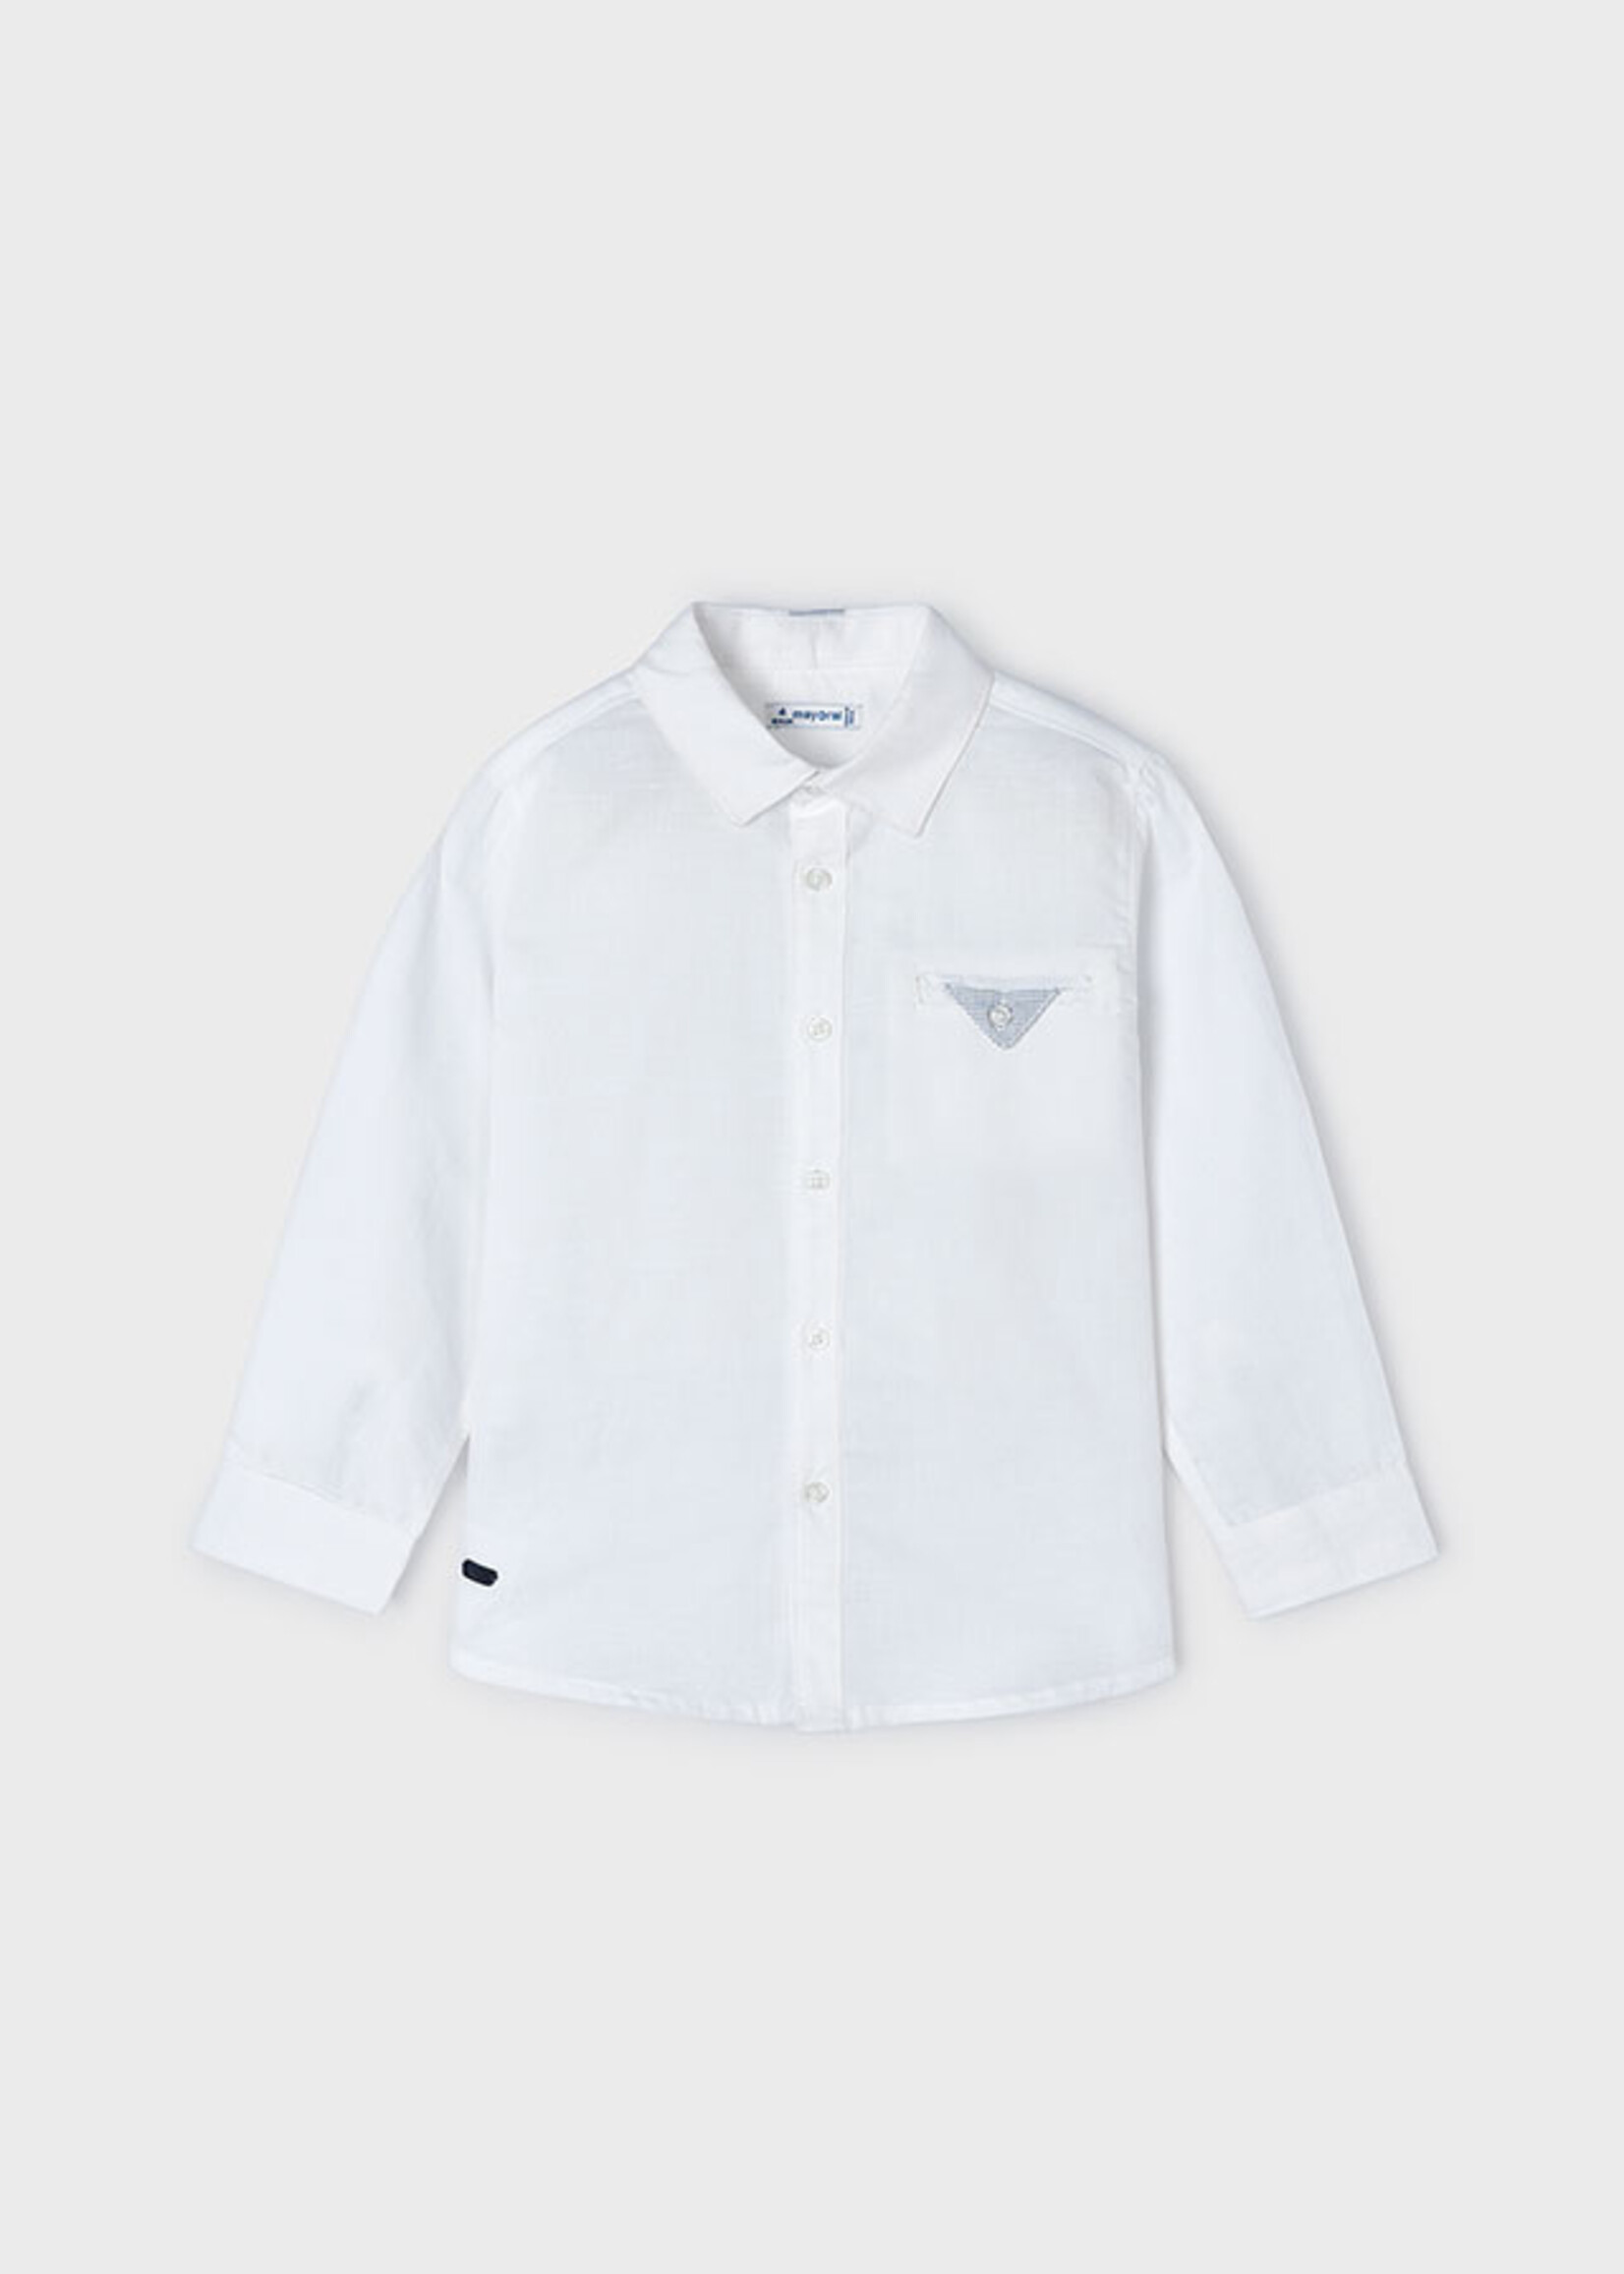 Mayoral Mini Boy             3122 S/s buttondown shirt          White